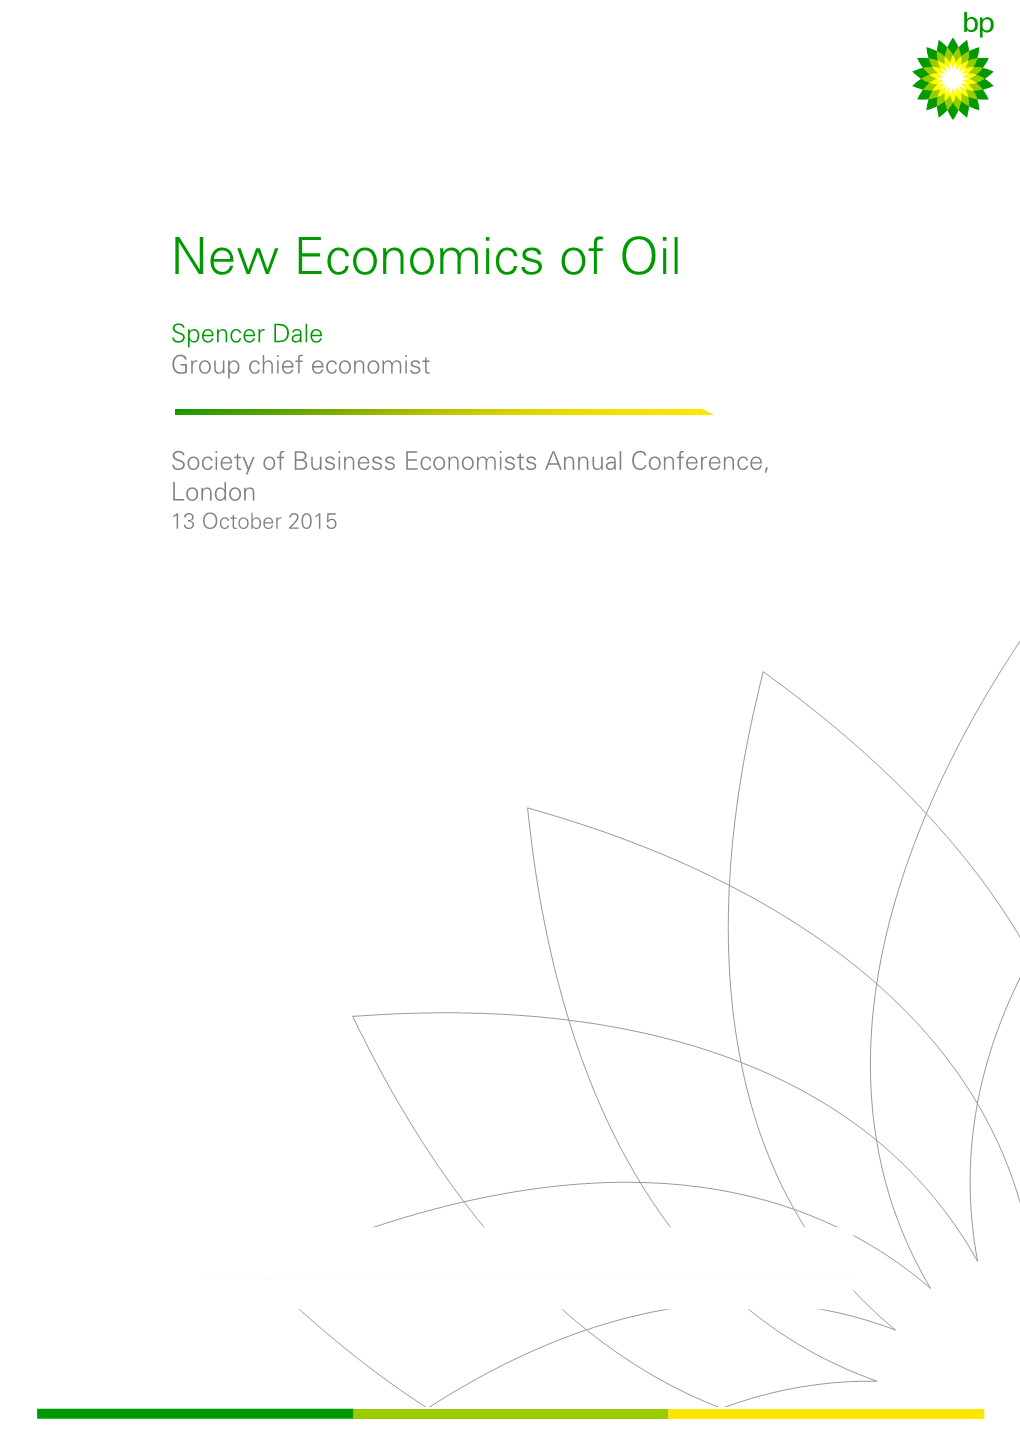 New Economics of Oil – Spencer Dale, Group Chief Economist